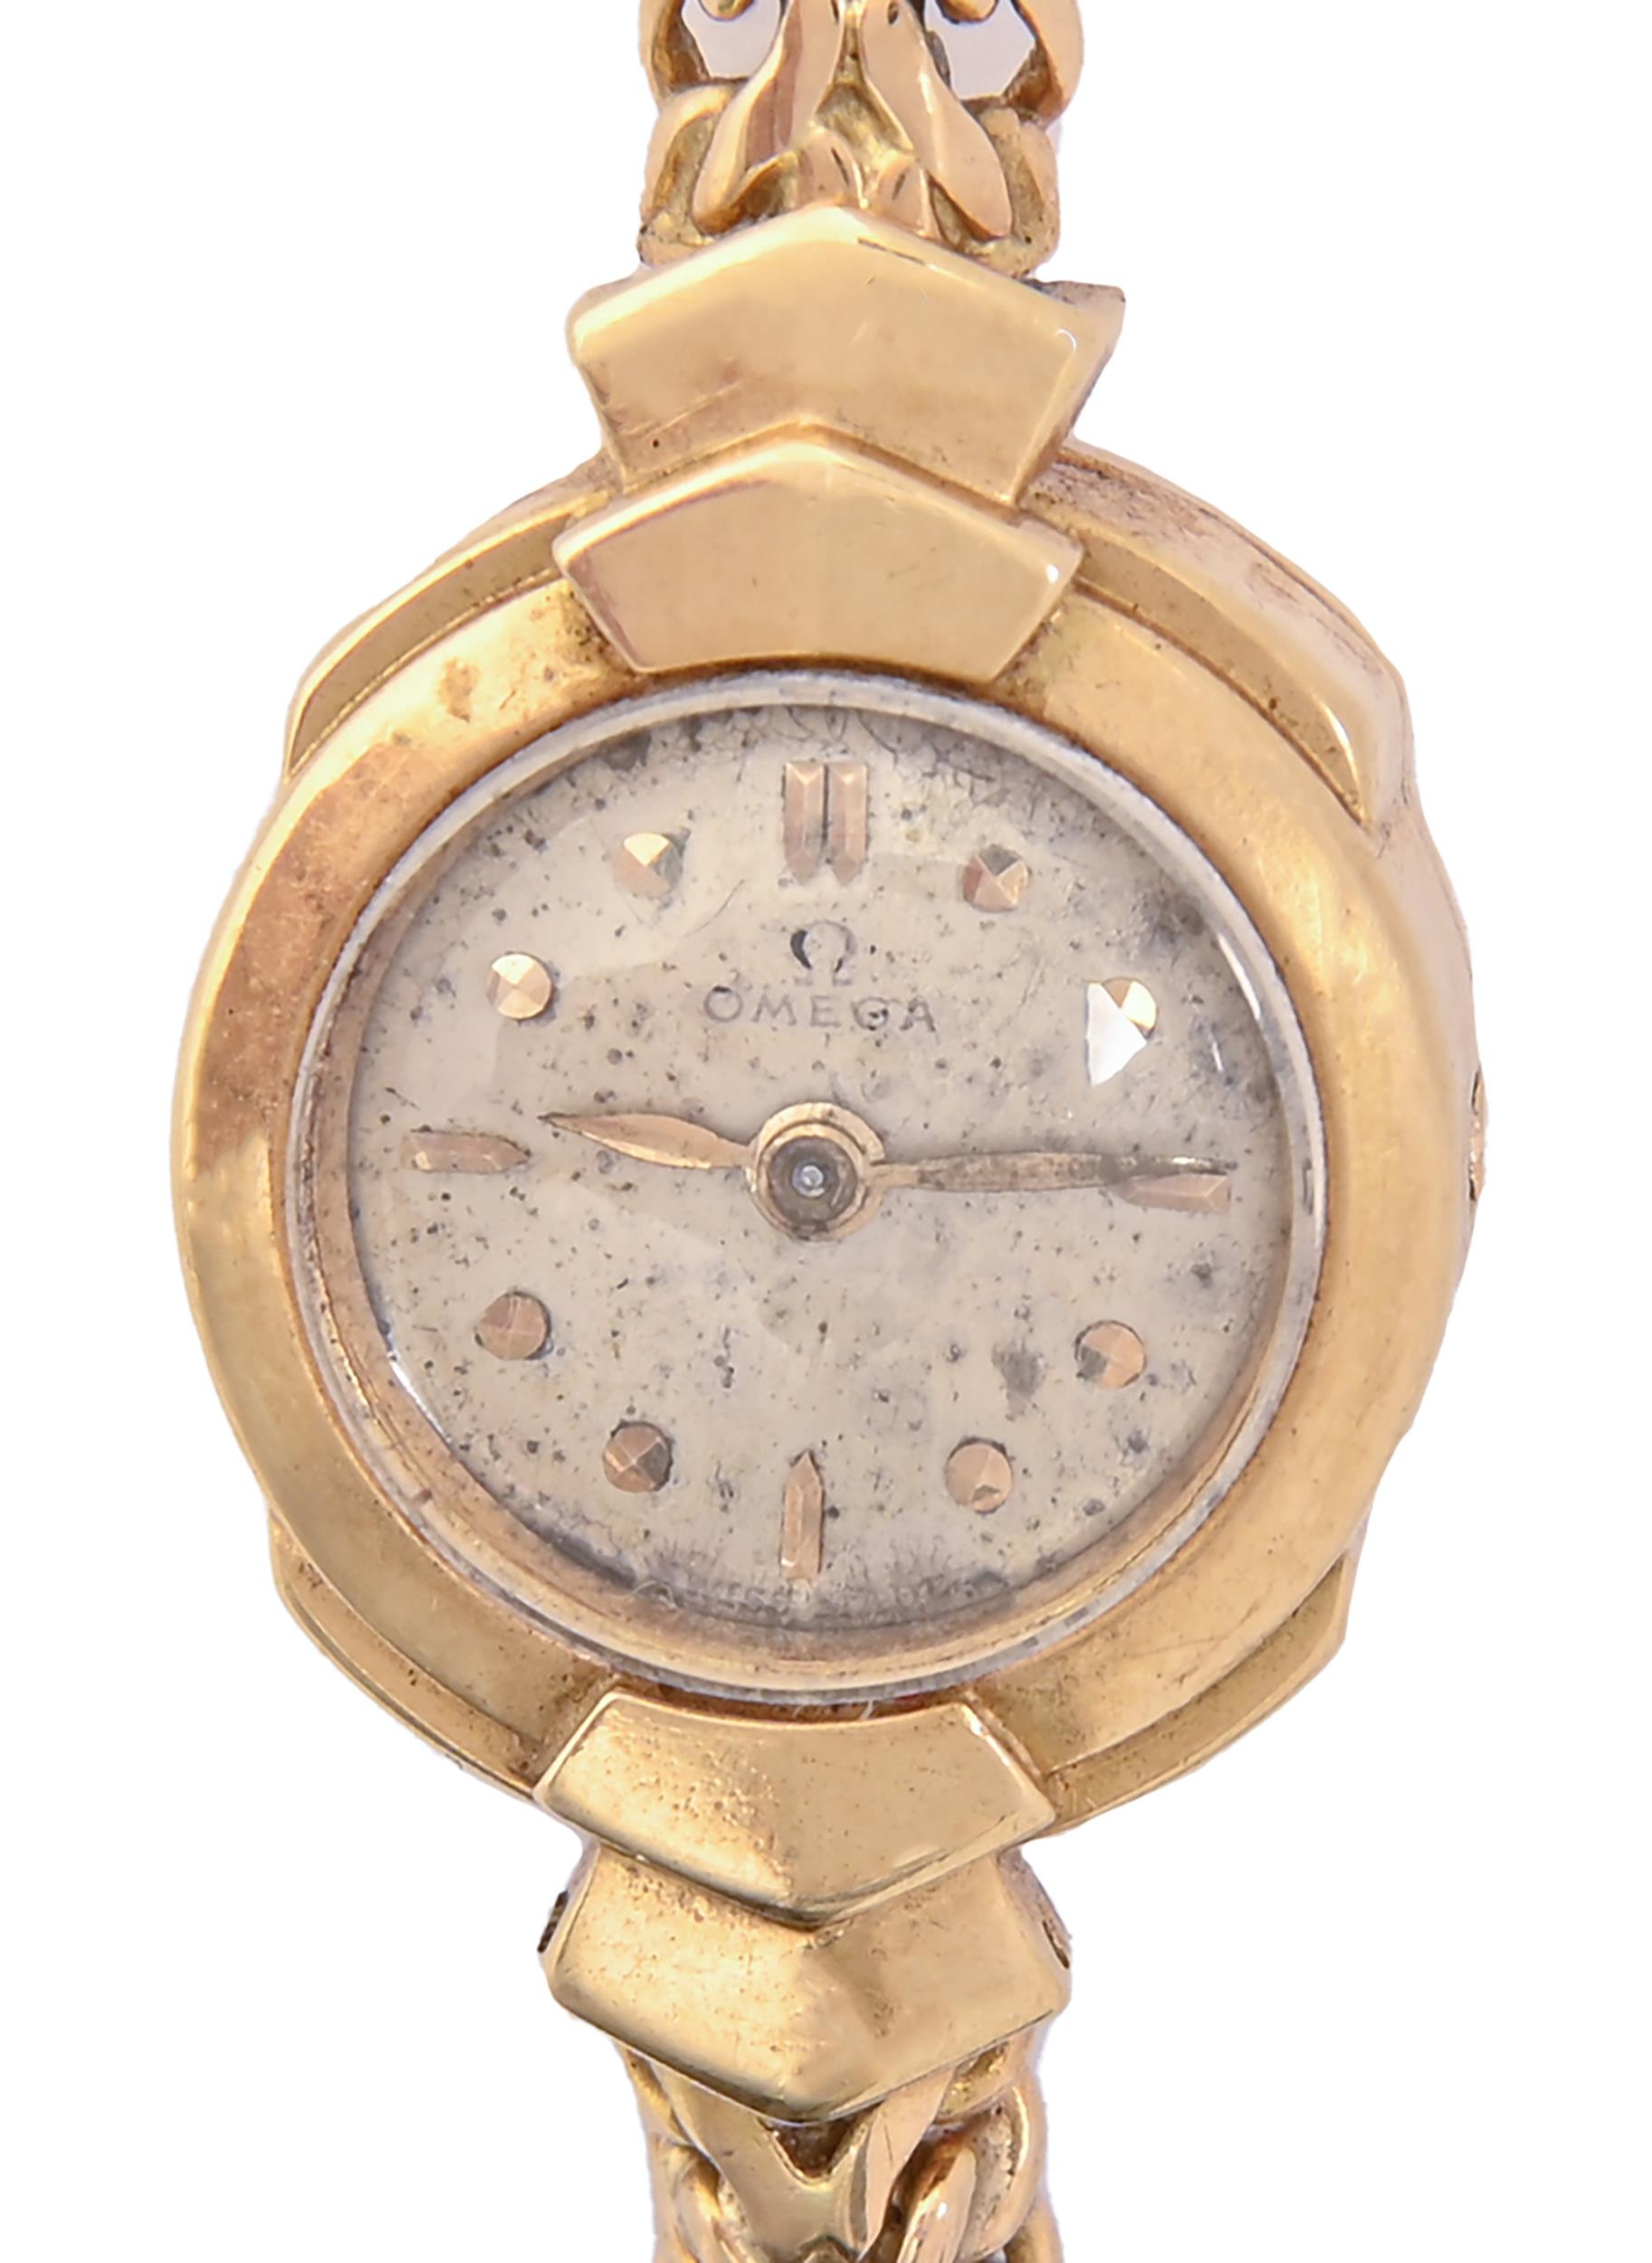 An Omega 18ct gold lady’s wristwatch, No 12079522, calibre 212 movement, 17mm, Denison case,